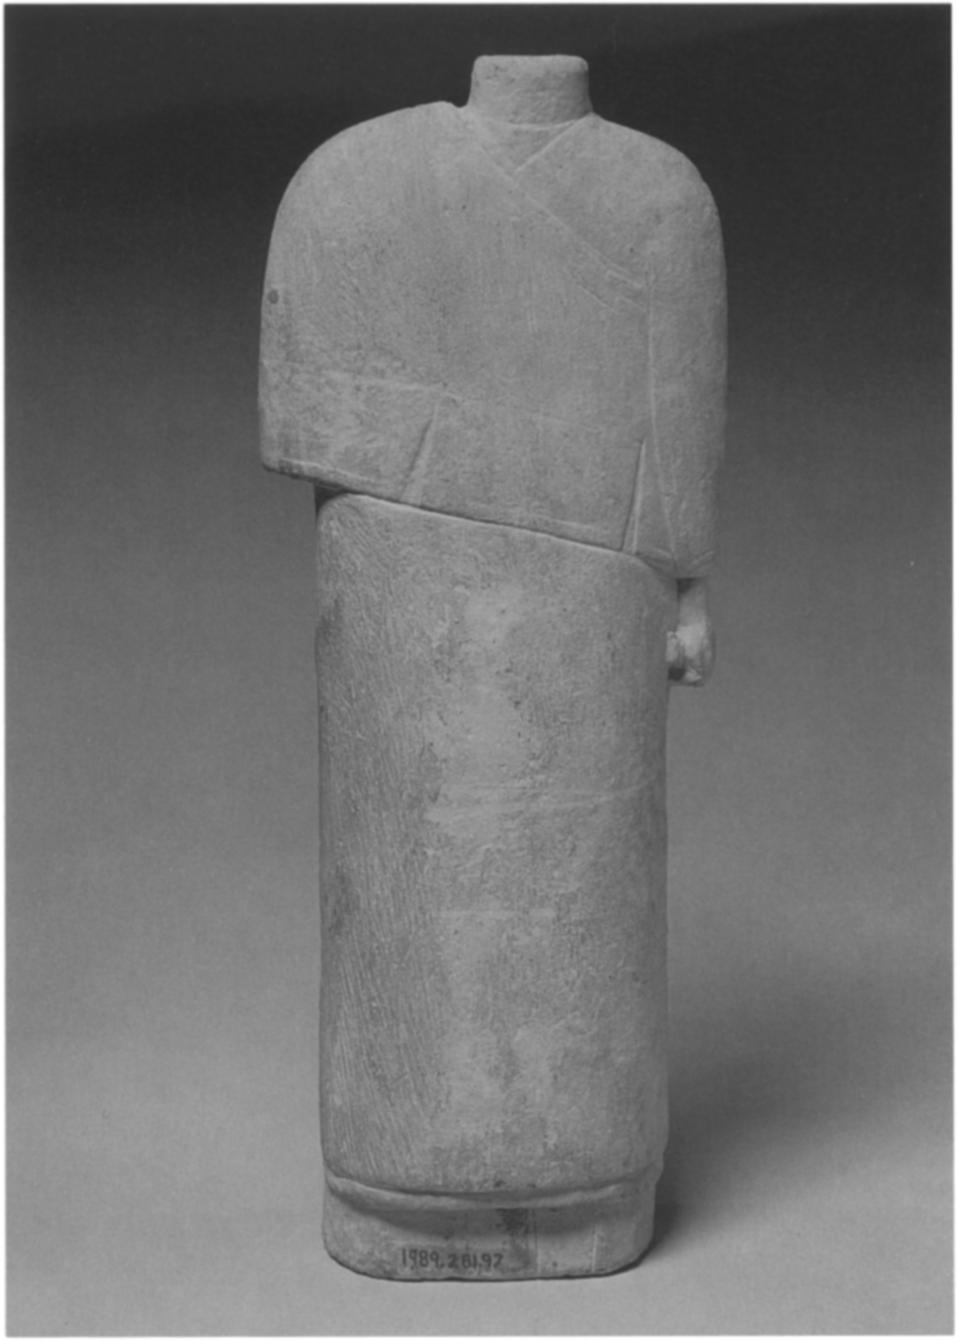 Bianchi, "The Striding Draped Male Figure of Ptolemaic Egypt," Das ptolemiische Agypten: Akten des internationalen Symposions, 27-29 Sept. 1976 in Berlin, Mainz, I978, p. ioo, fig.